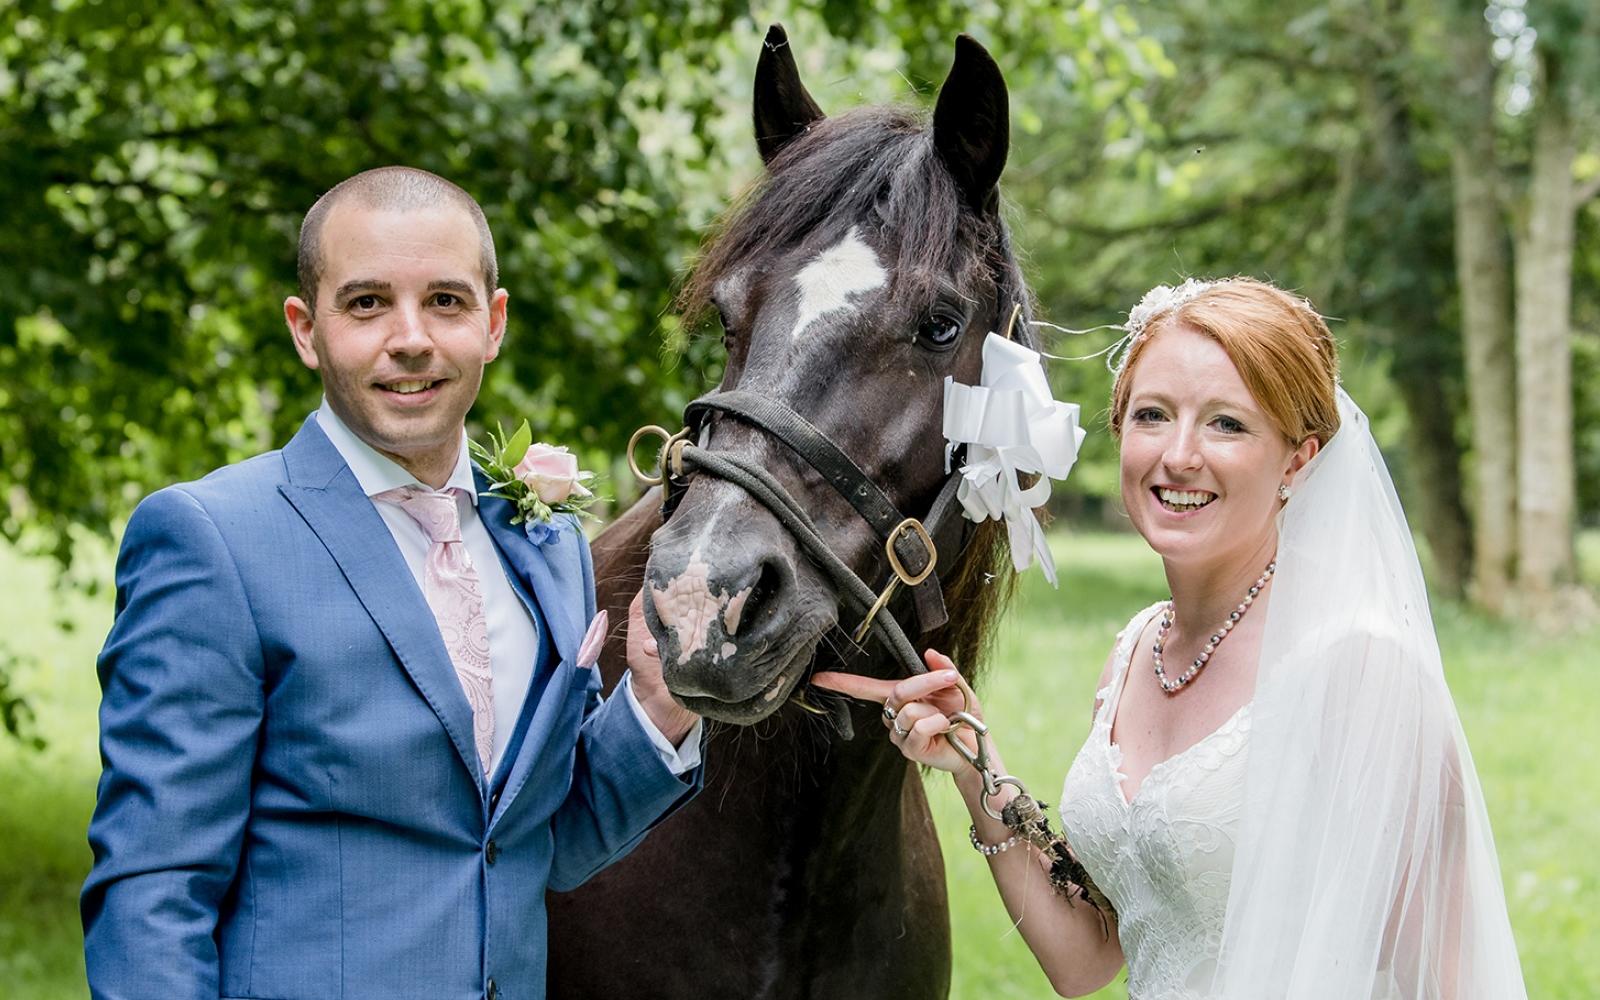 Capture Every Moment Cirencester based photography duo photographers Bittenham Springs wedding venue horse photograph treasured pet